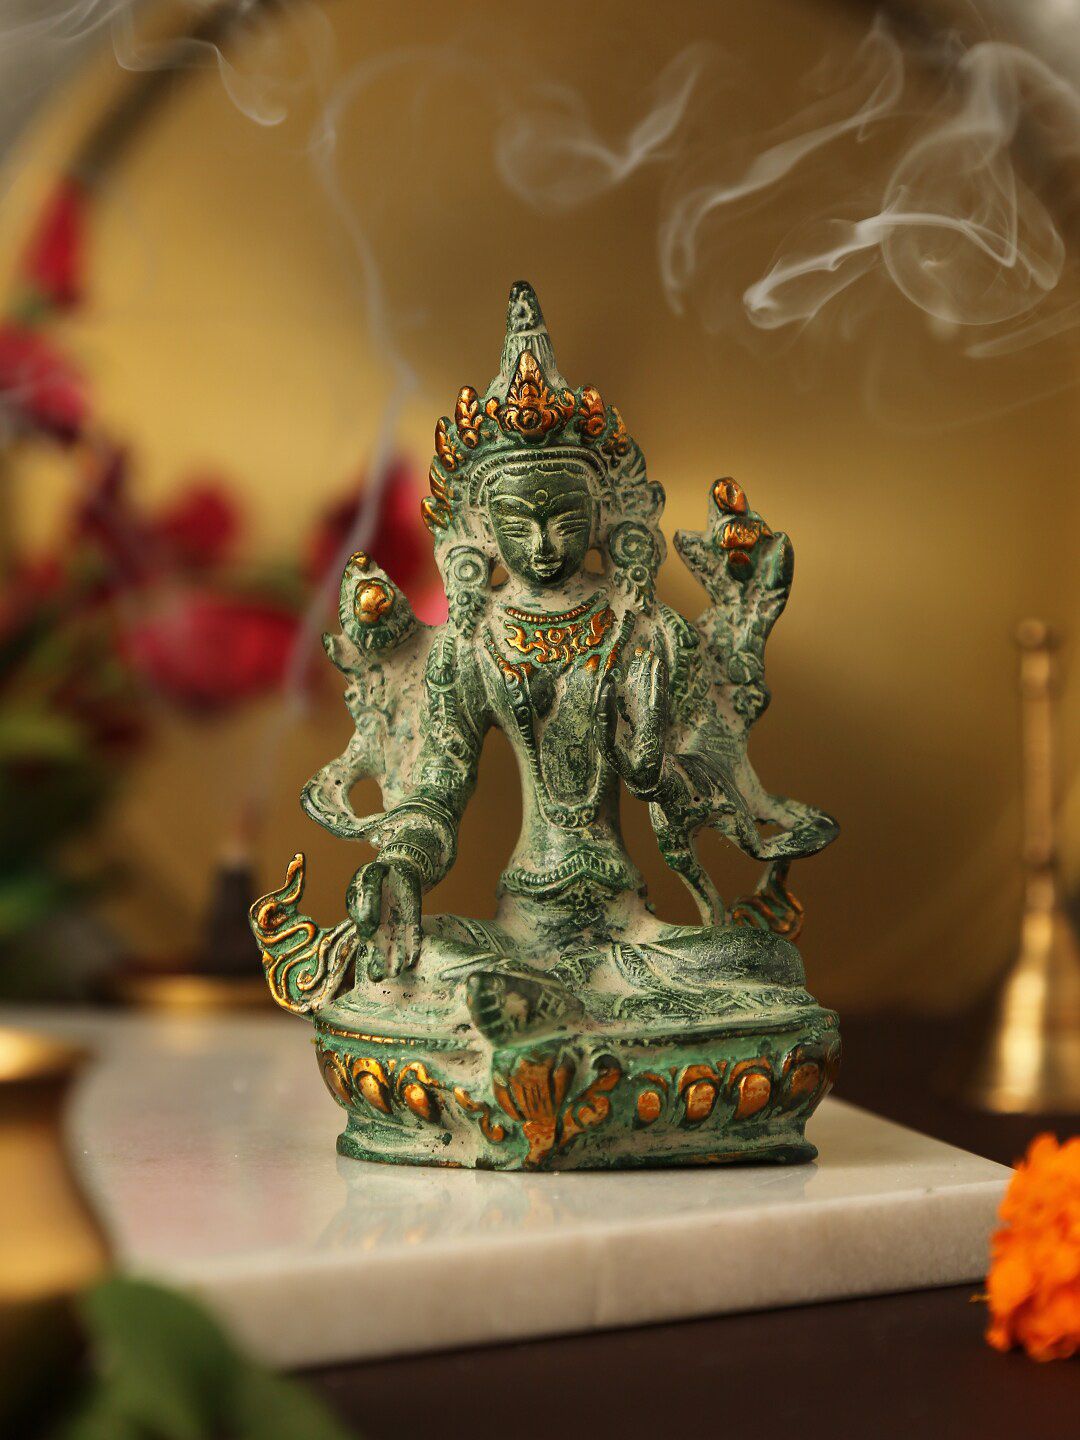 Amoliconcepts Green Tara Devi Idol Showpieces Price in India